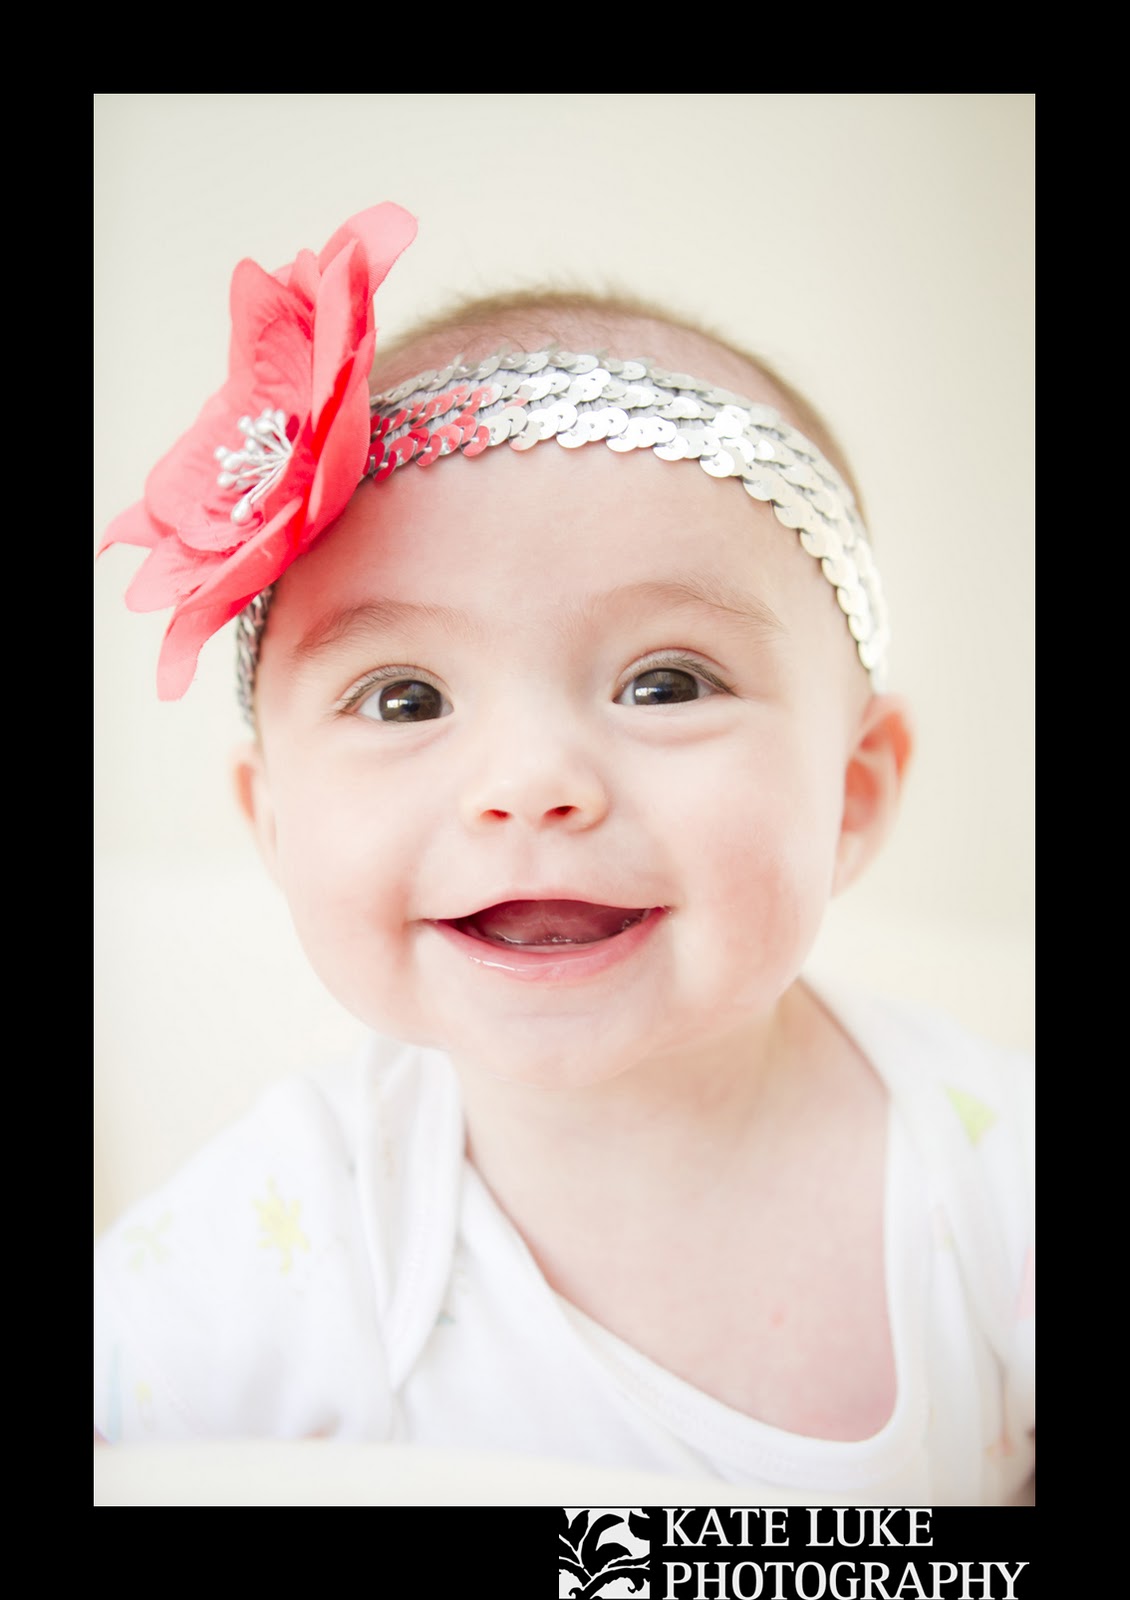 Kate Luke Photography: Canberra Baby Photographer ...